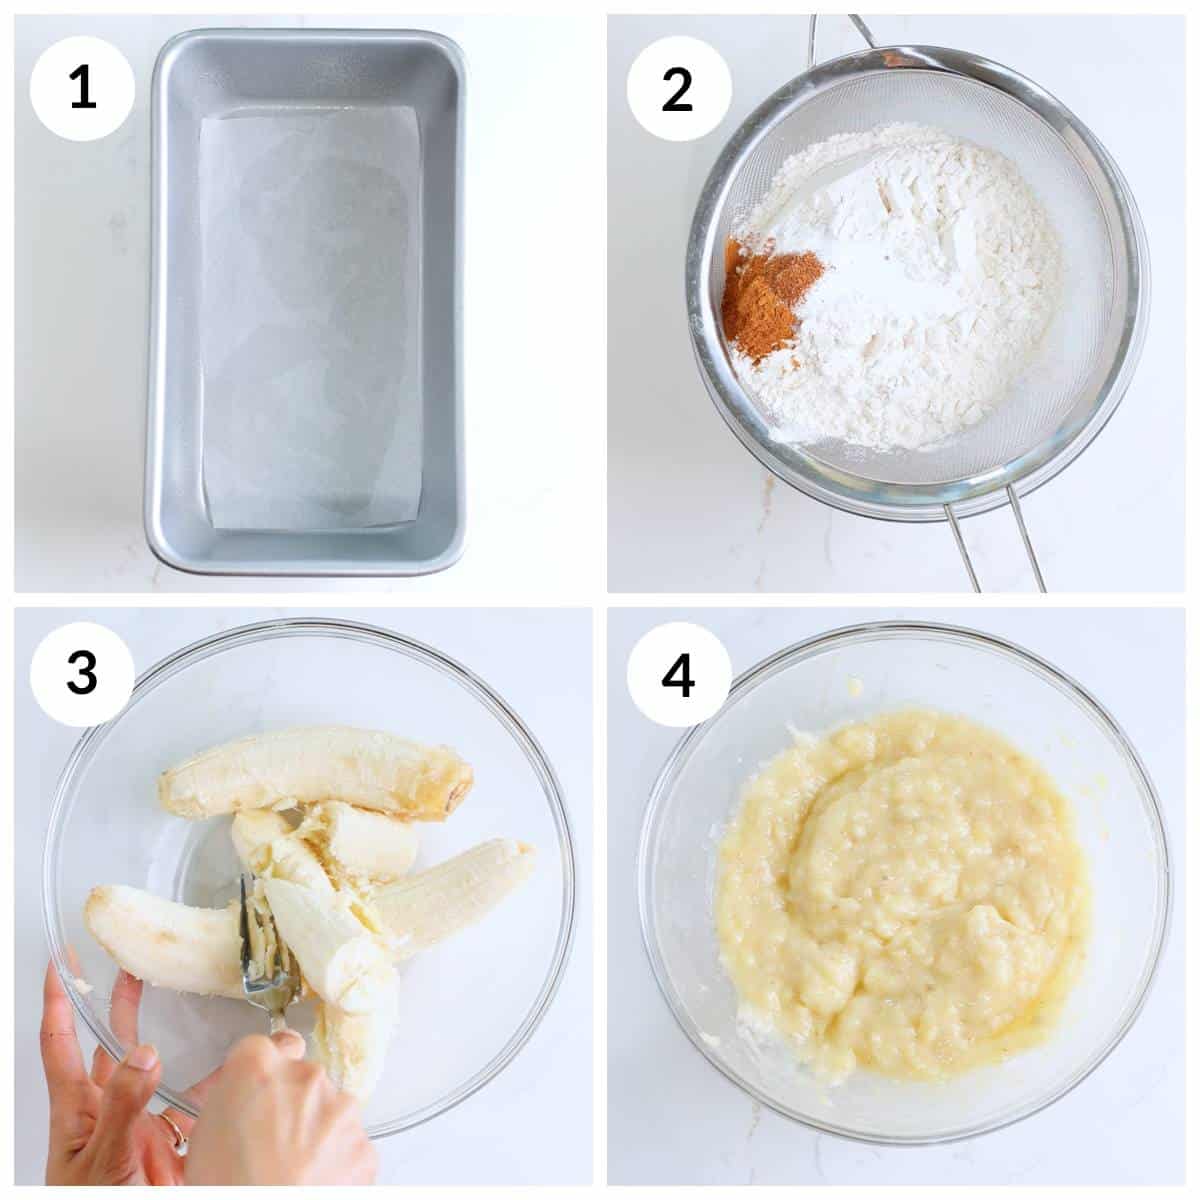 Steps for sifting dry ingredients & mashing bananas for eggless banana bread